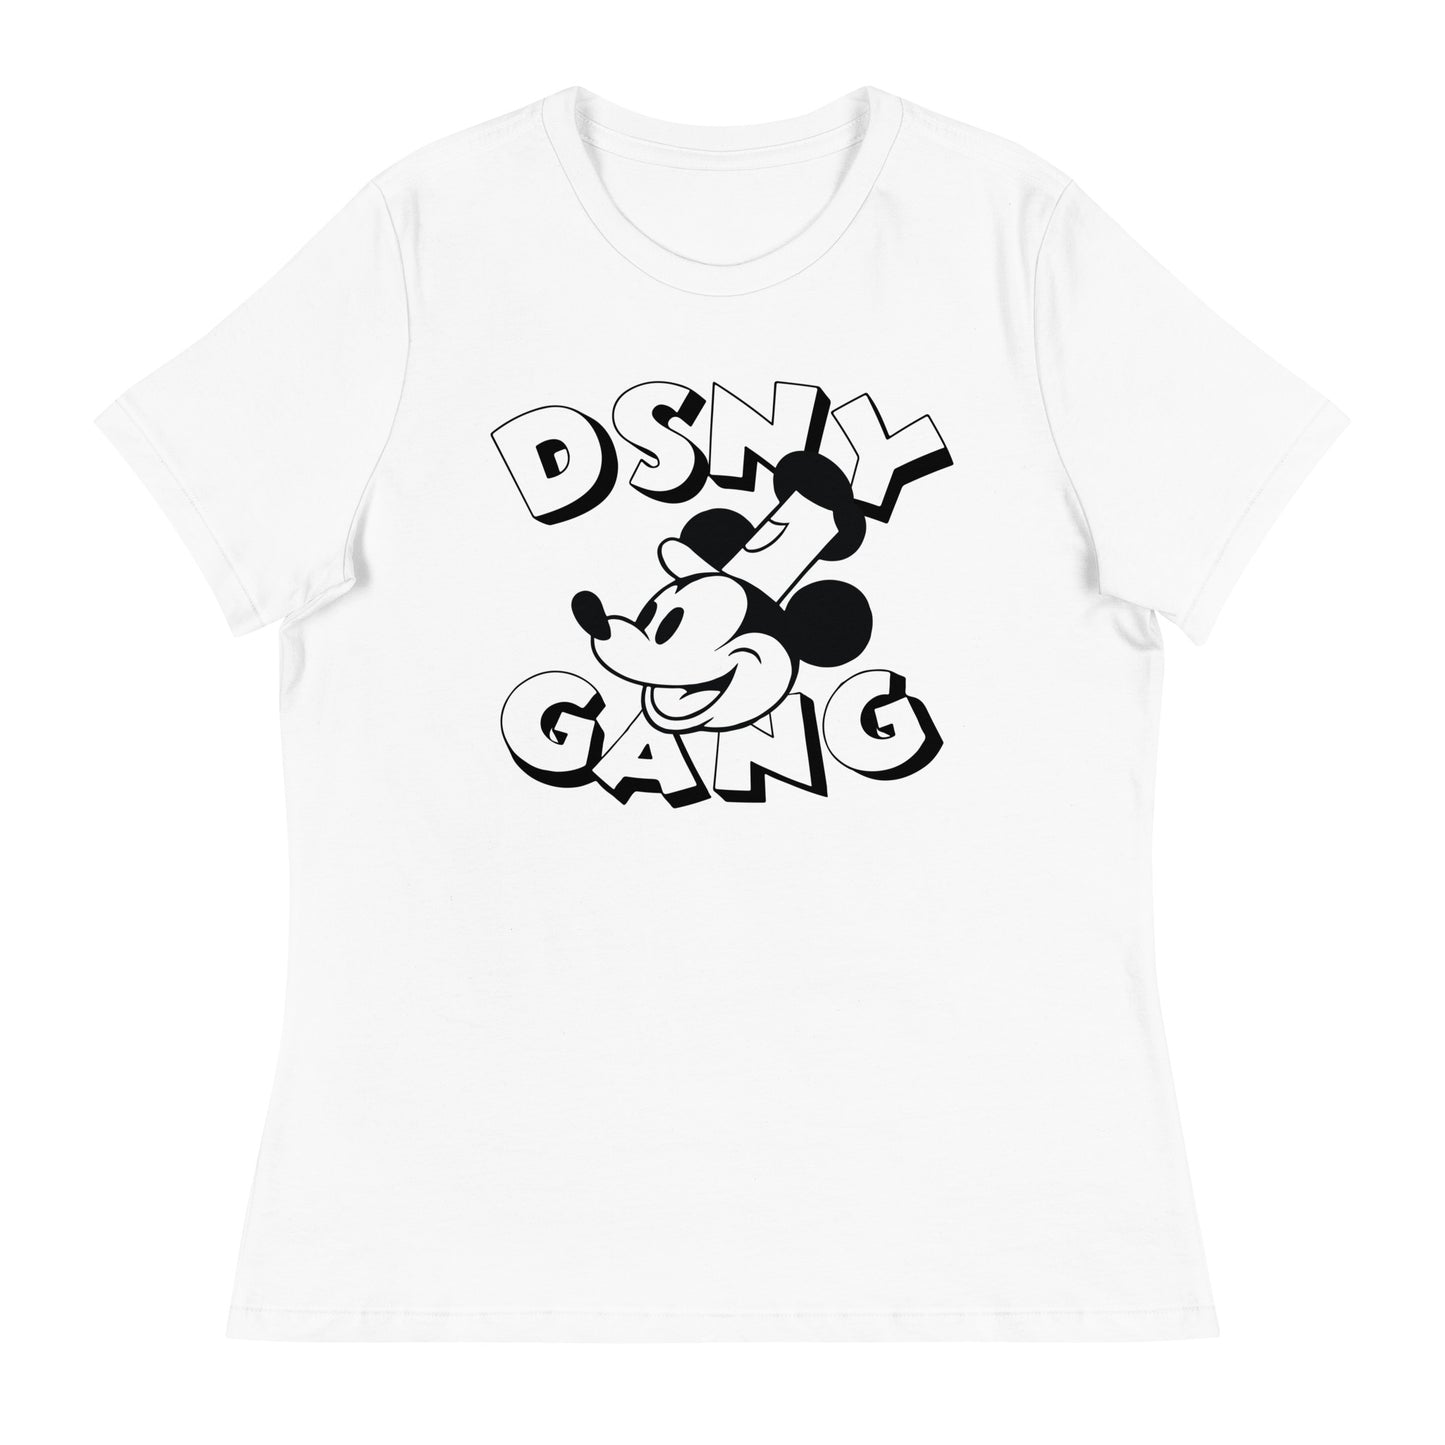 DSNY Gang Steamboat Willie Women's Tee